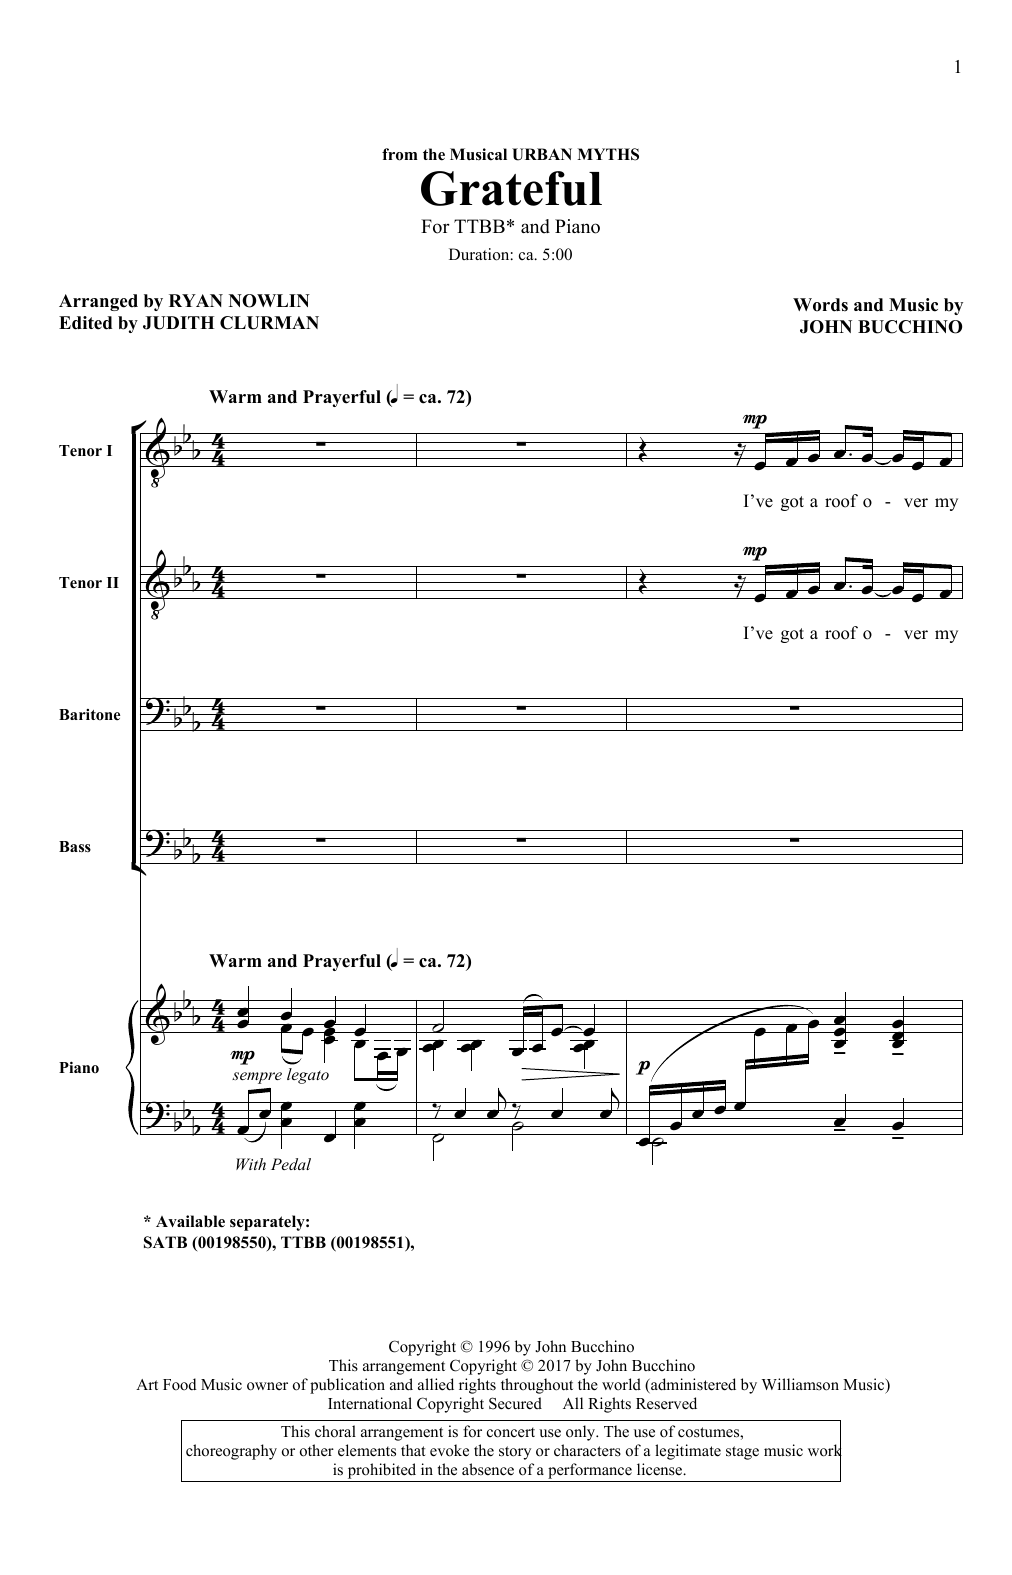 John Bucchino Grateful sheet music notes and chords arranged for TTBB Choir